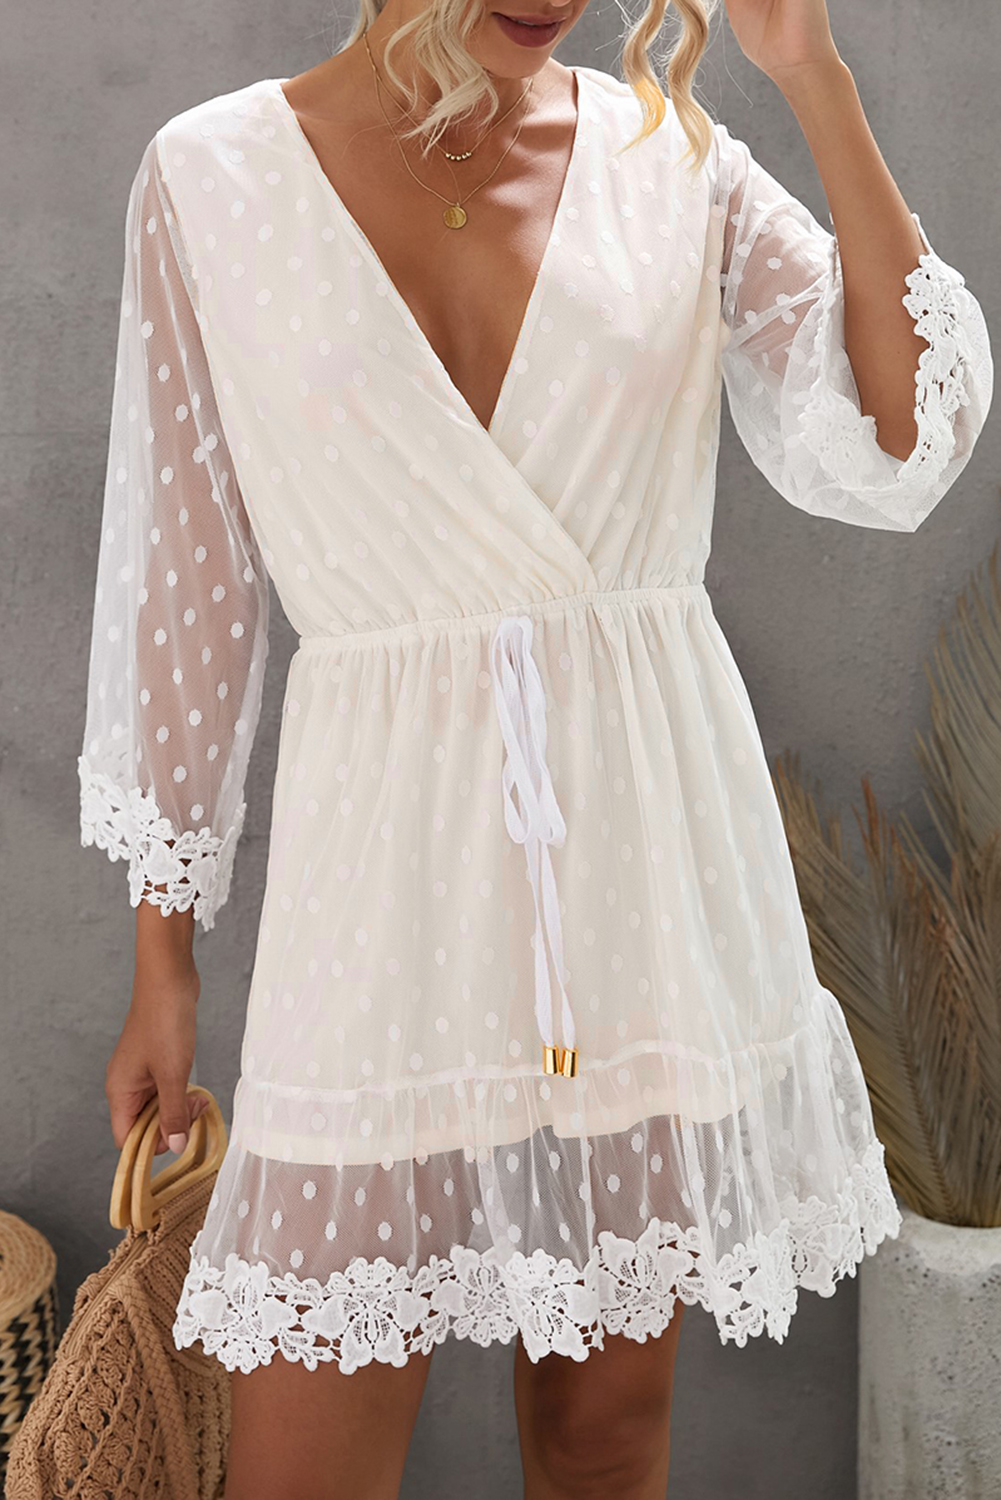 White Wrap V Neck Elastic Waist Polka Dot Mesh Lace Splicing Dress - (US 8-10)M